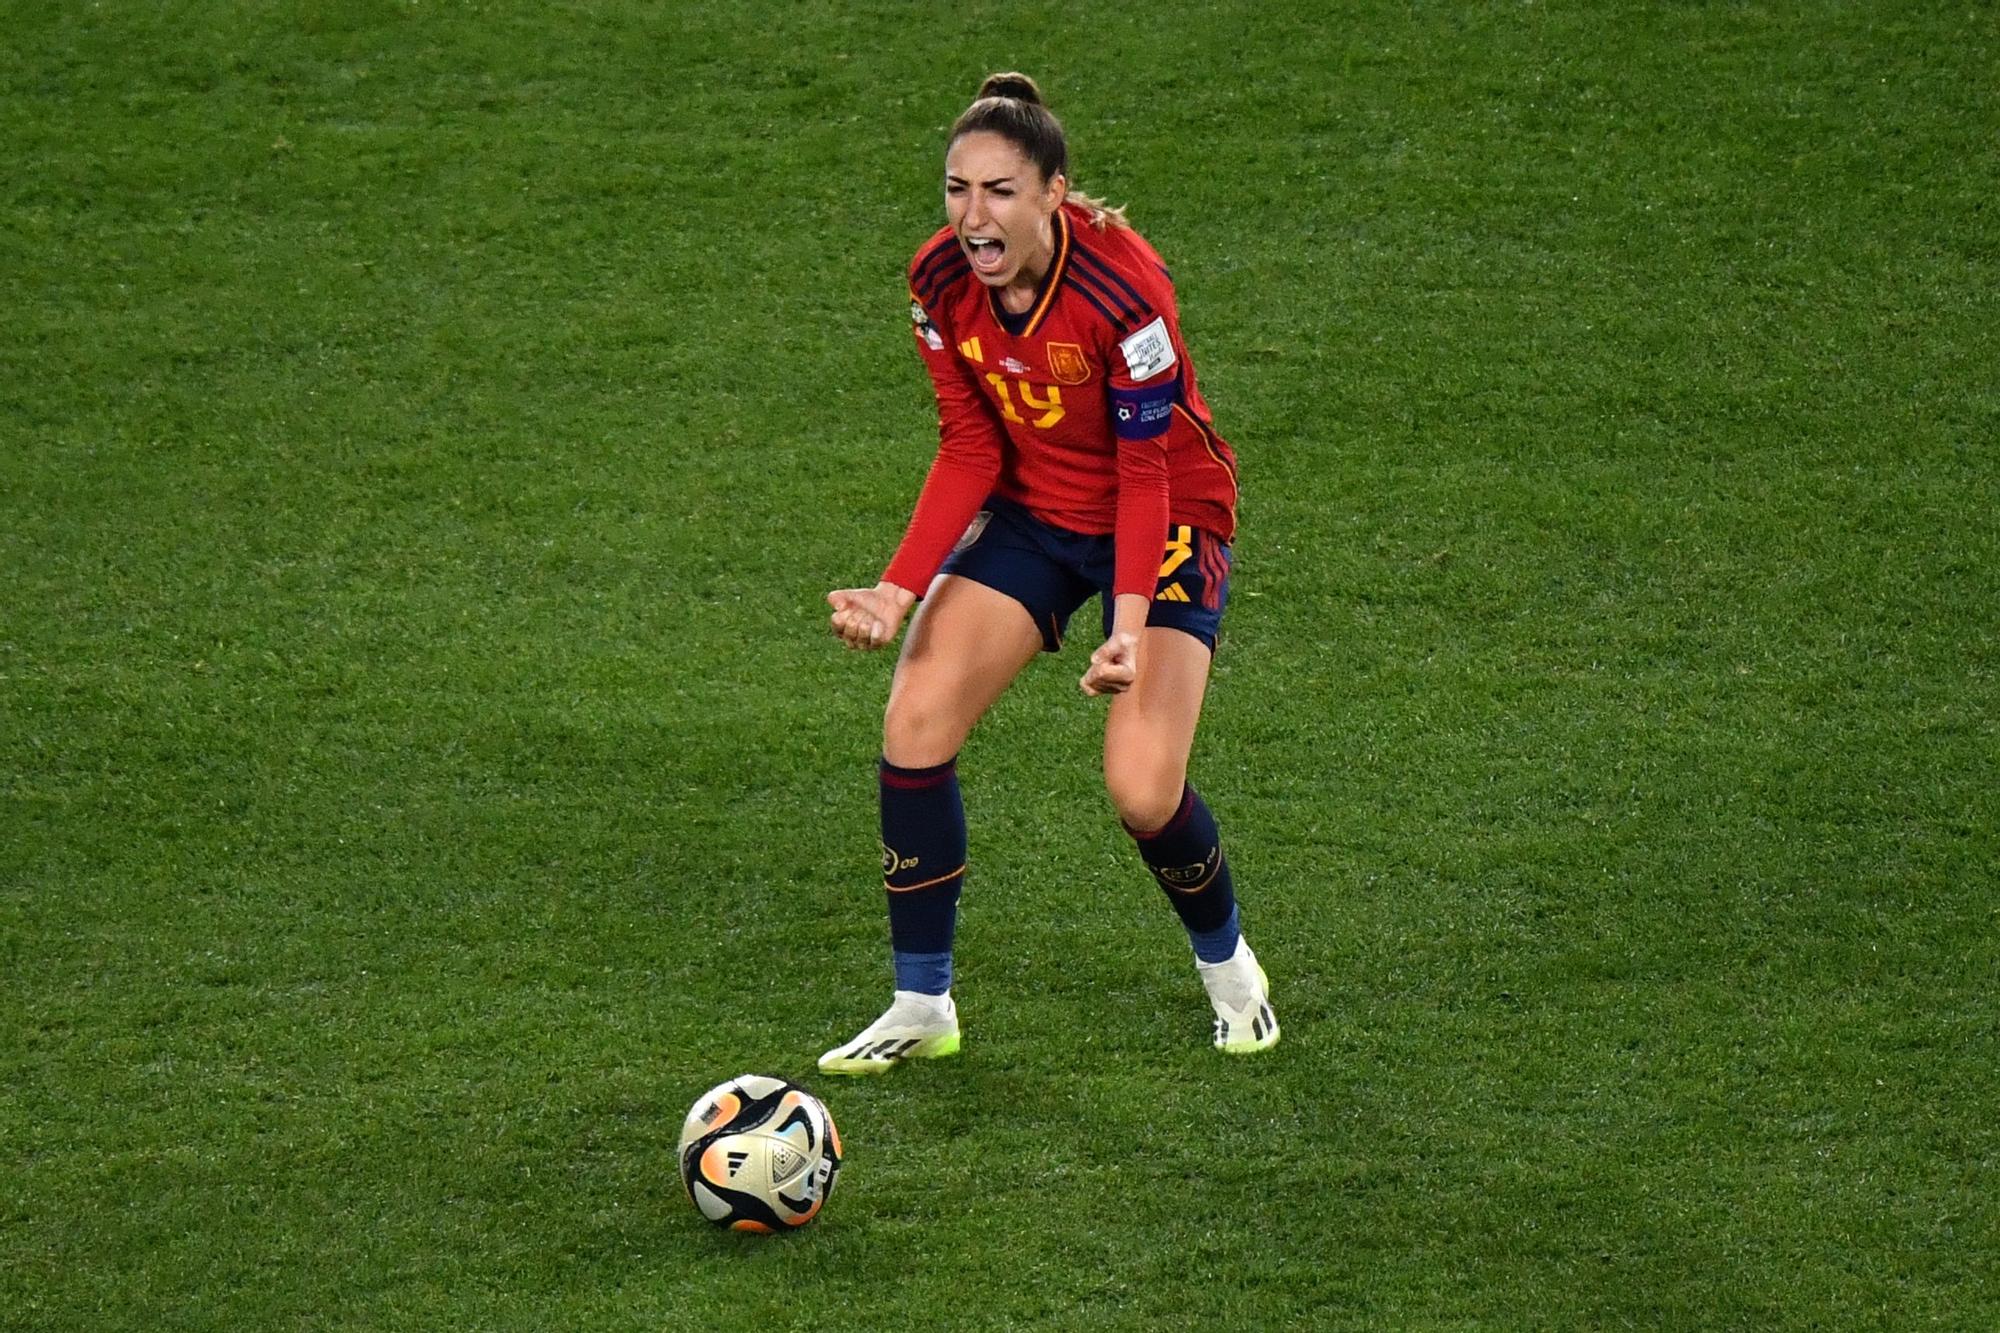 FIFA Women's World Cup final - Spain vs England